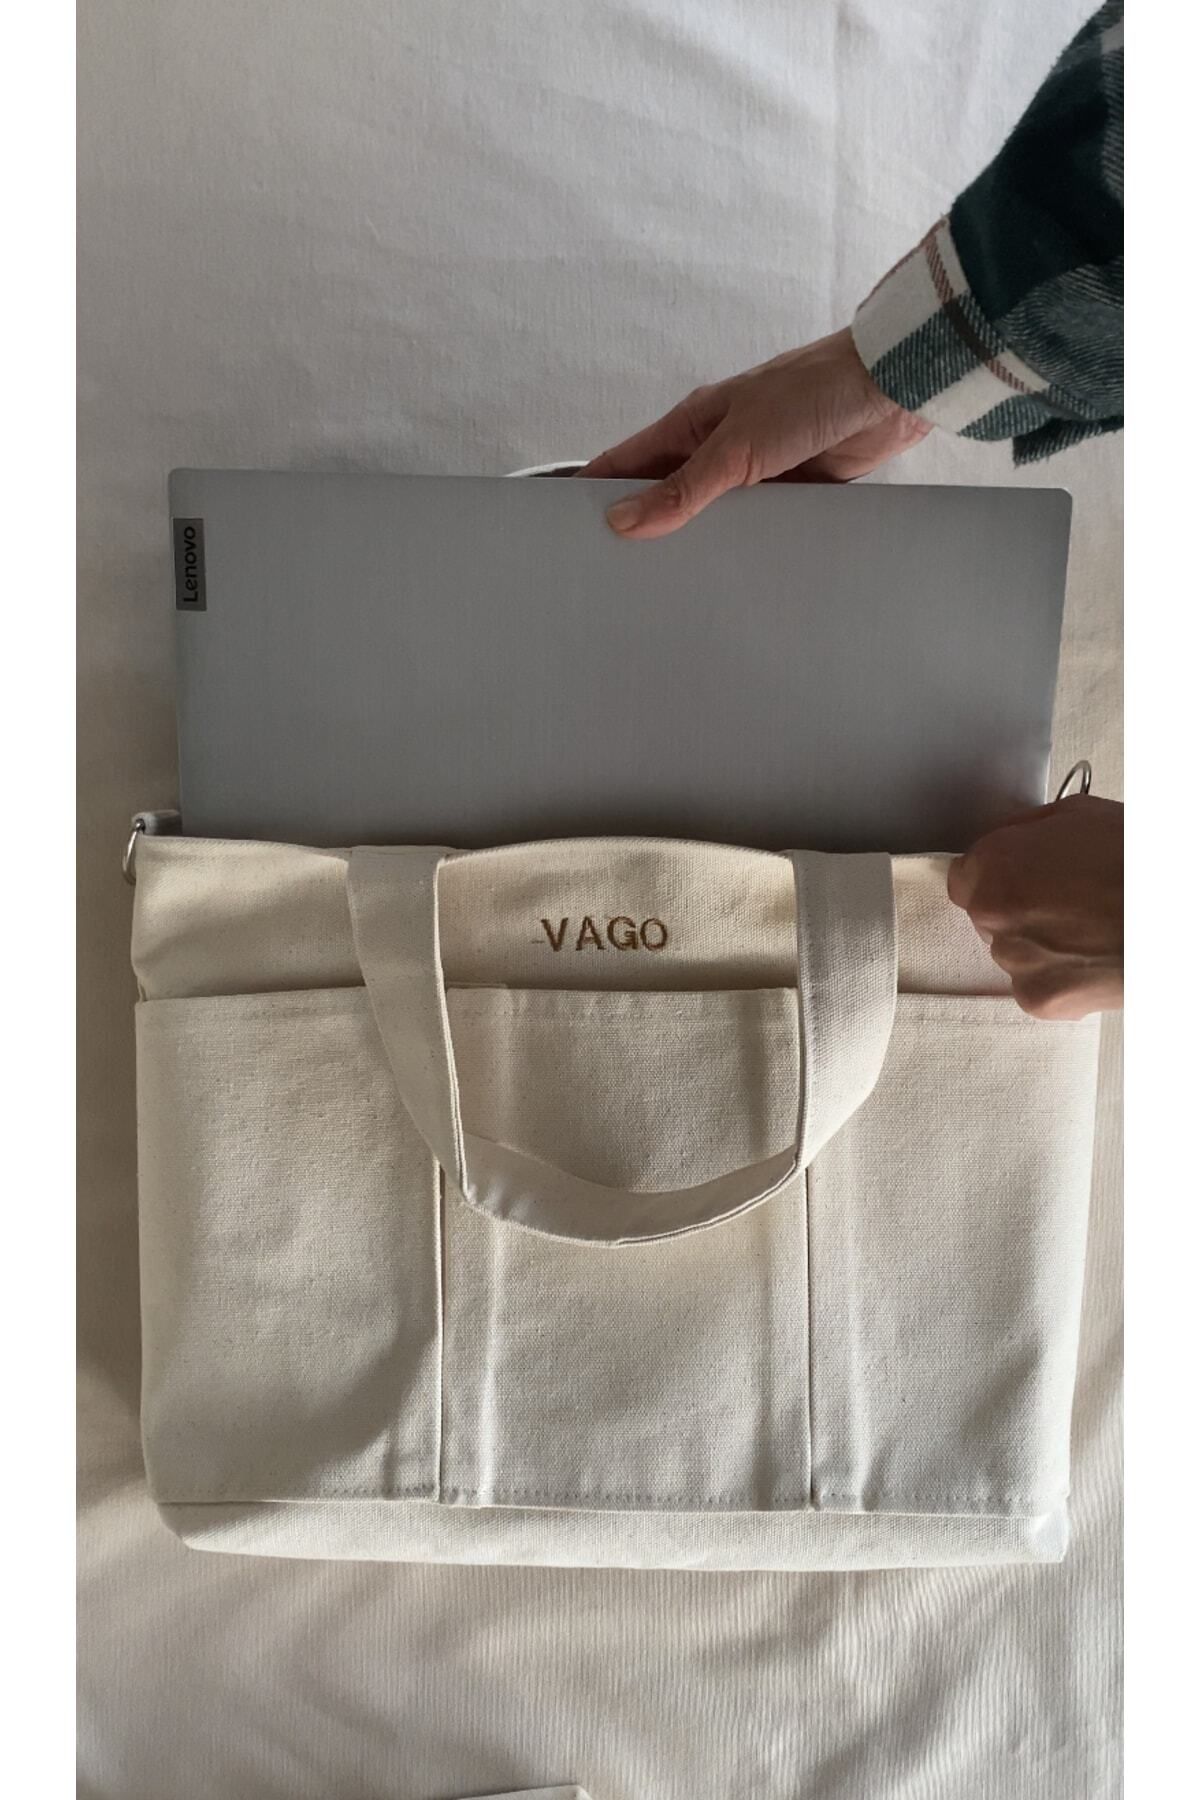 VAGO COLLECTION Laptop Size Organik Kanvas Çanta